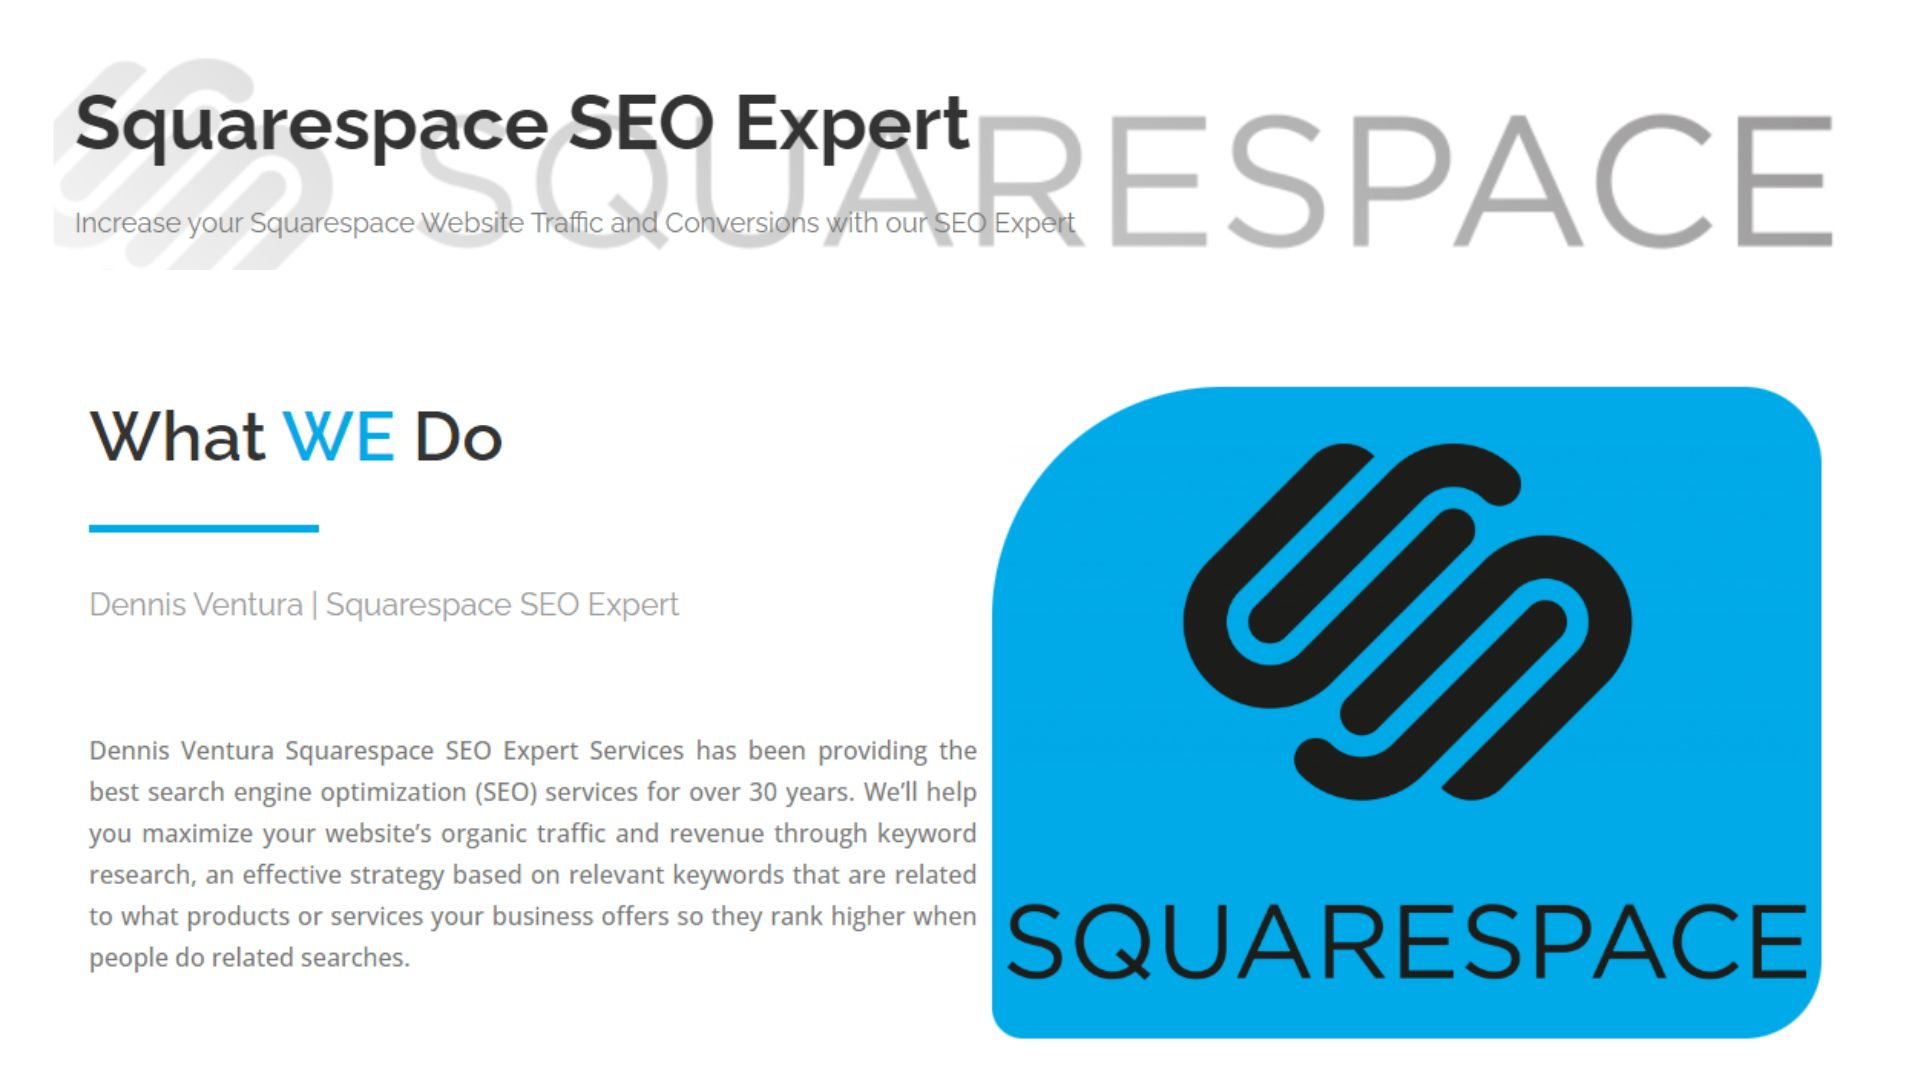 How Do I Find a Reputable Company of Squarespace SEO Expert?